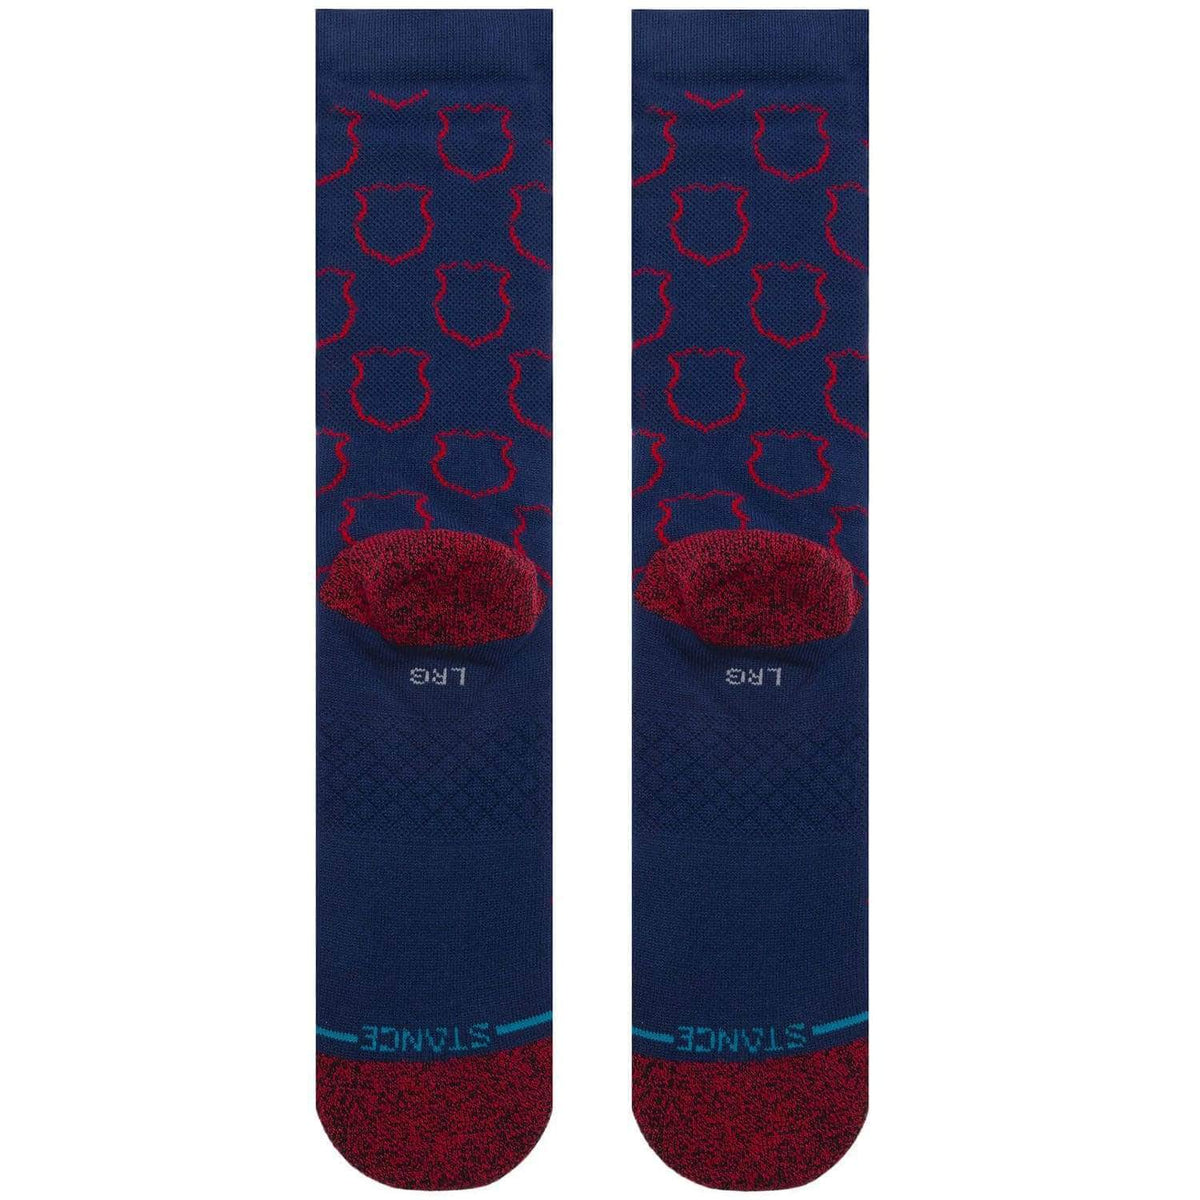 Stance X FC Barcelona FCB Crest Socks - Navy - Unisex Crew Length Socks by Stance